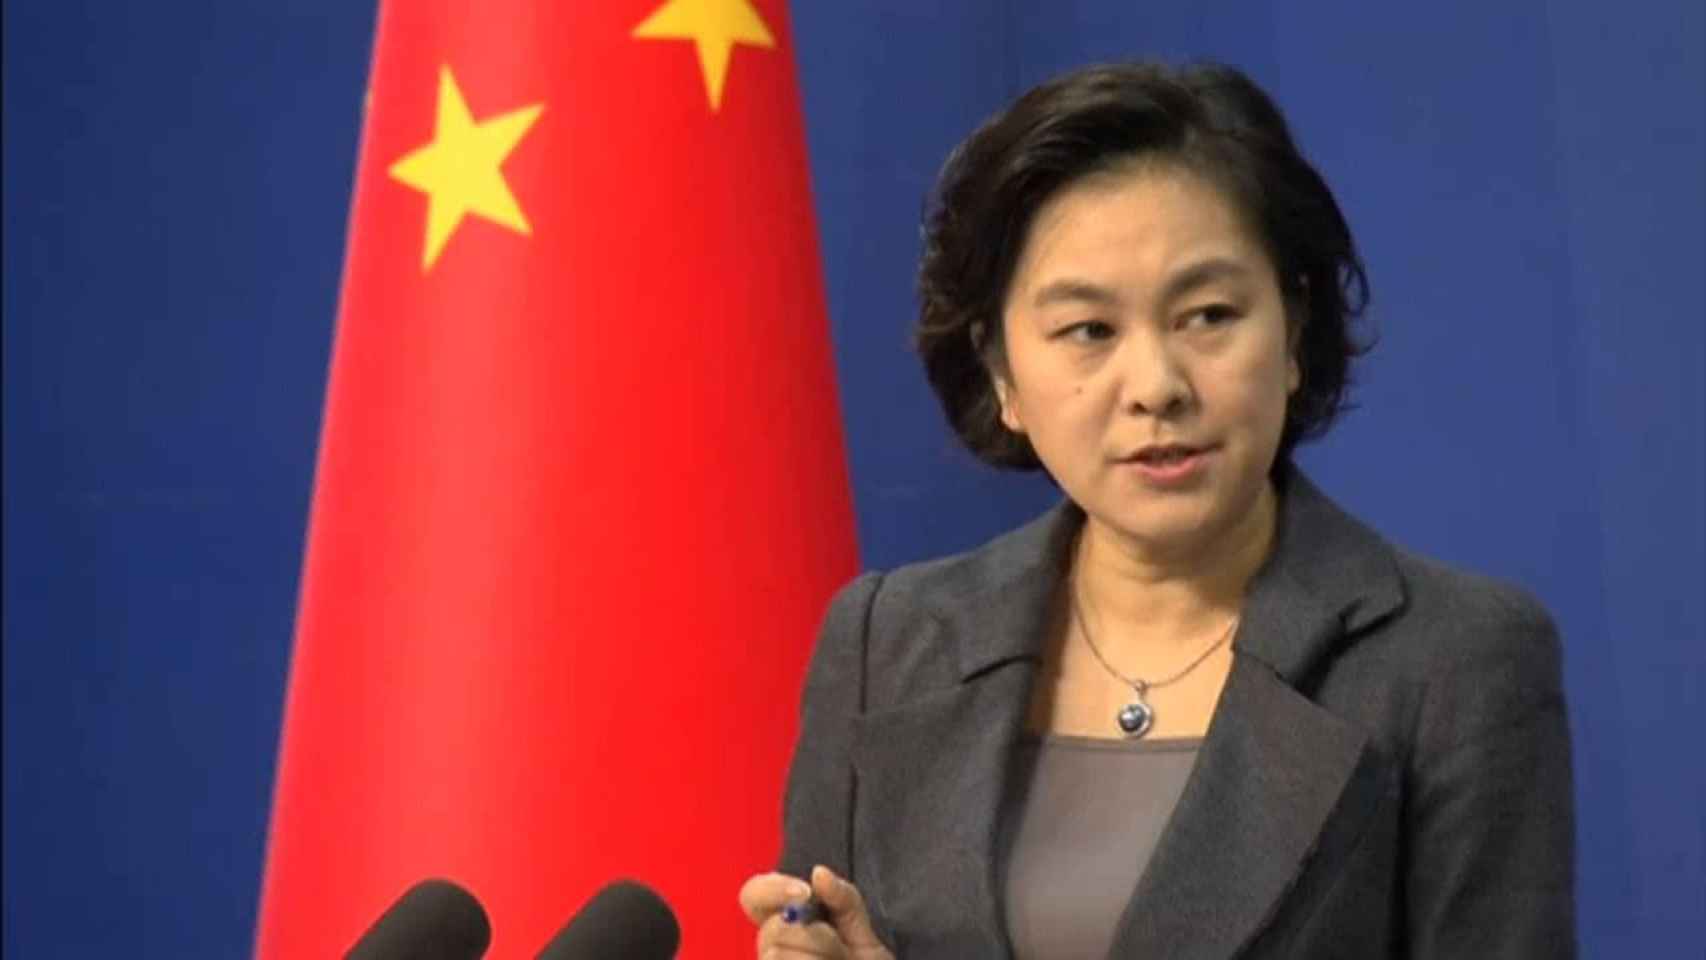 La portavoz del Ministerio de Exteriores chino, Hua Chunying. China rechaza la independencia de Cataluña